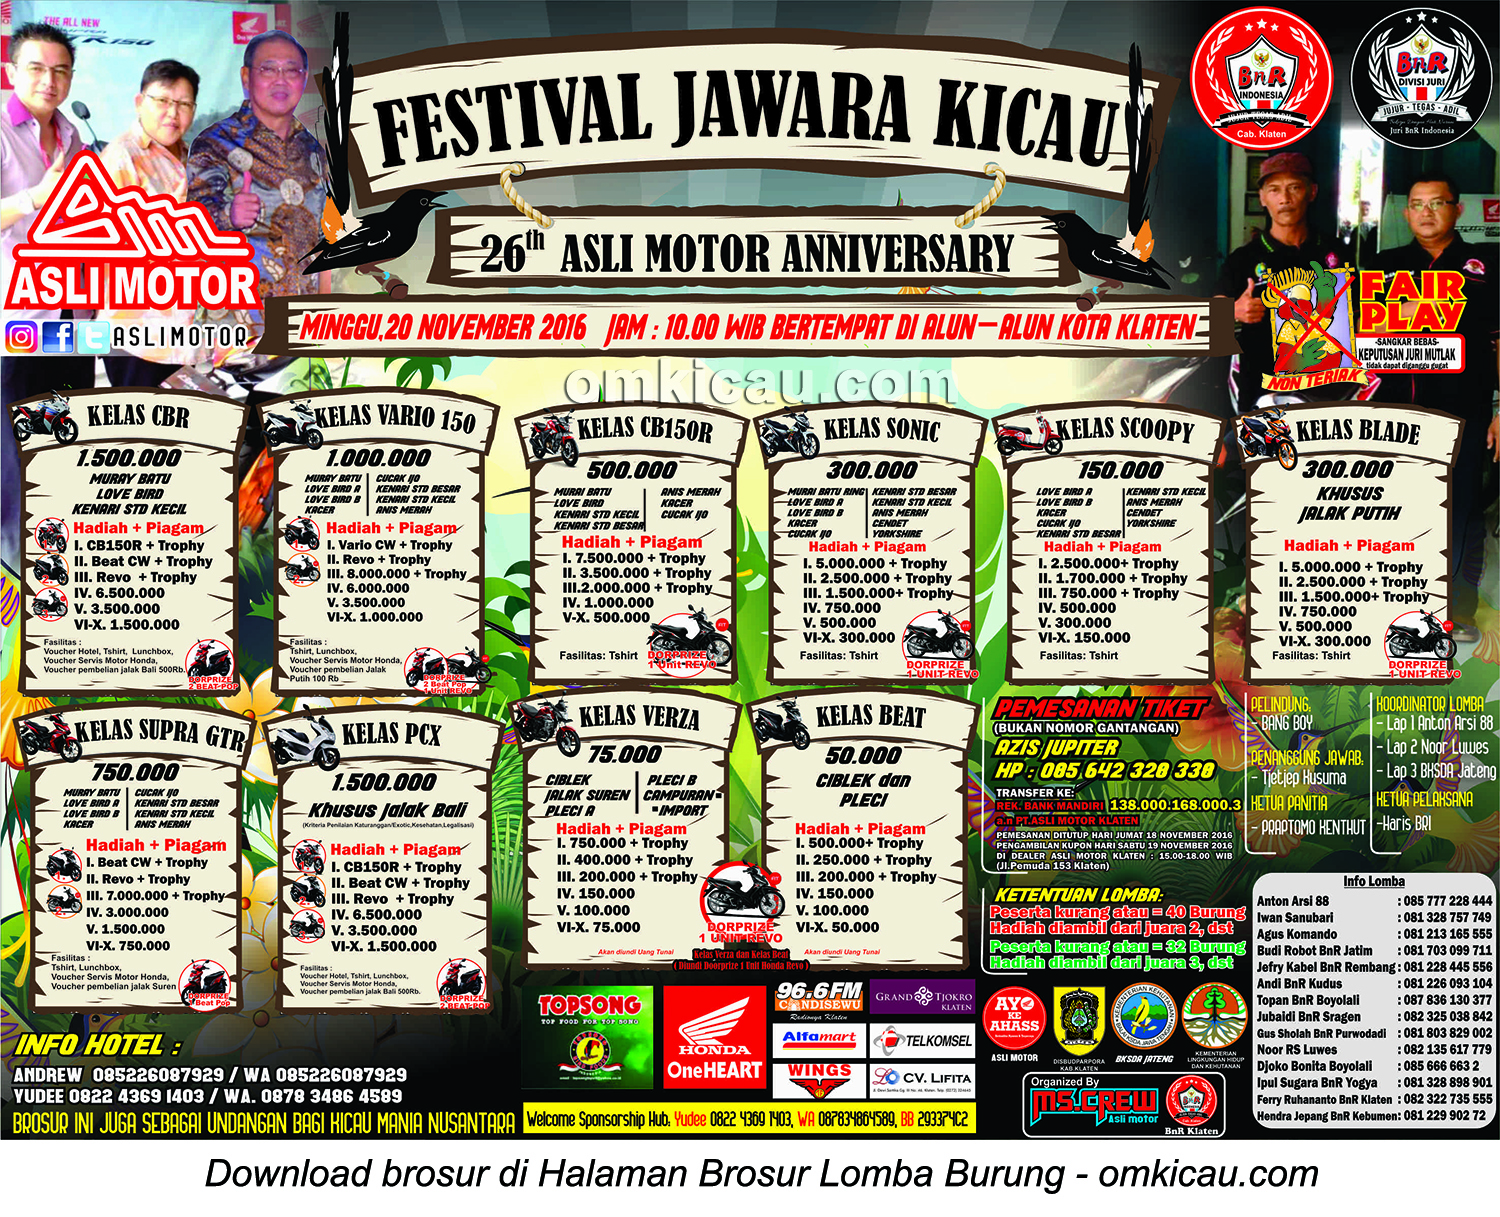 Brosur Festival Jawara Kicau 26th Asli Motor Anniversary, Klaten, 20 November 2016